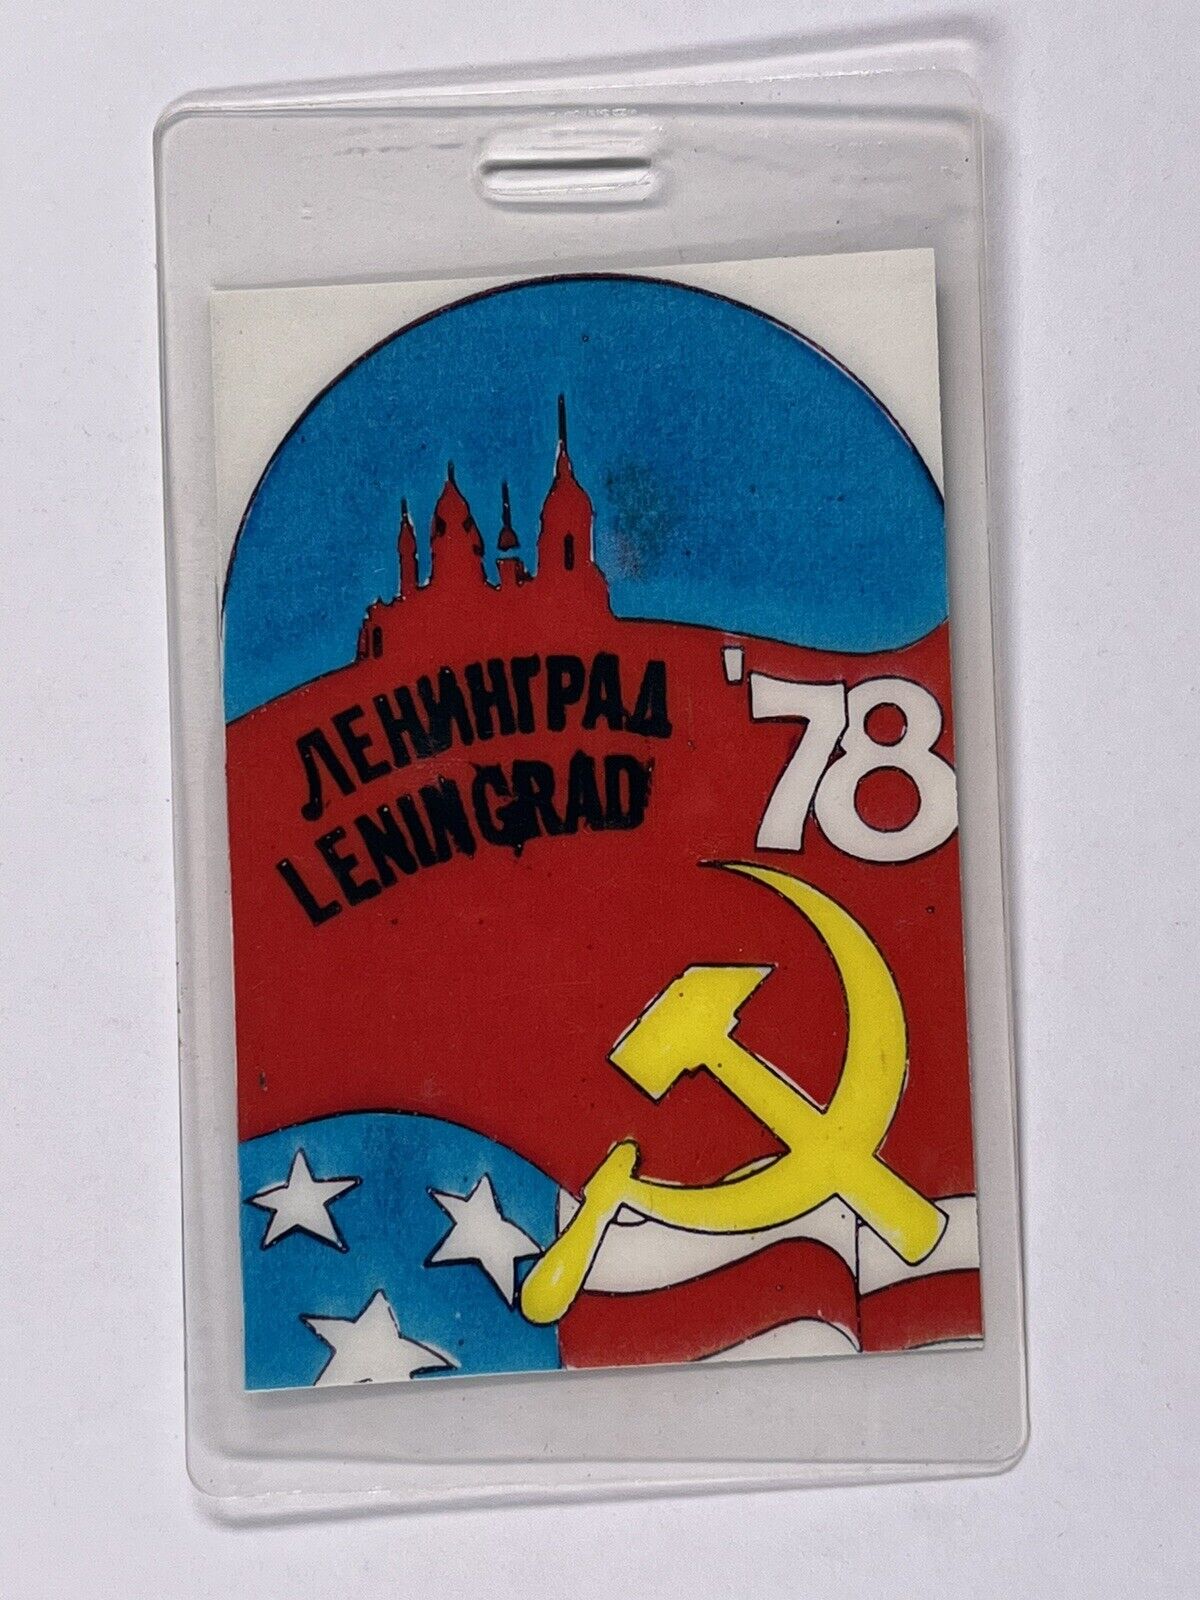 Joan Baez The Beach Boys Santana Pass Ticket Original Leningrad Moscow 1978